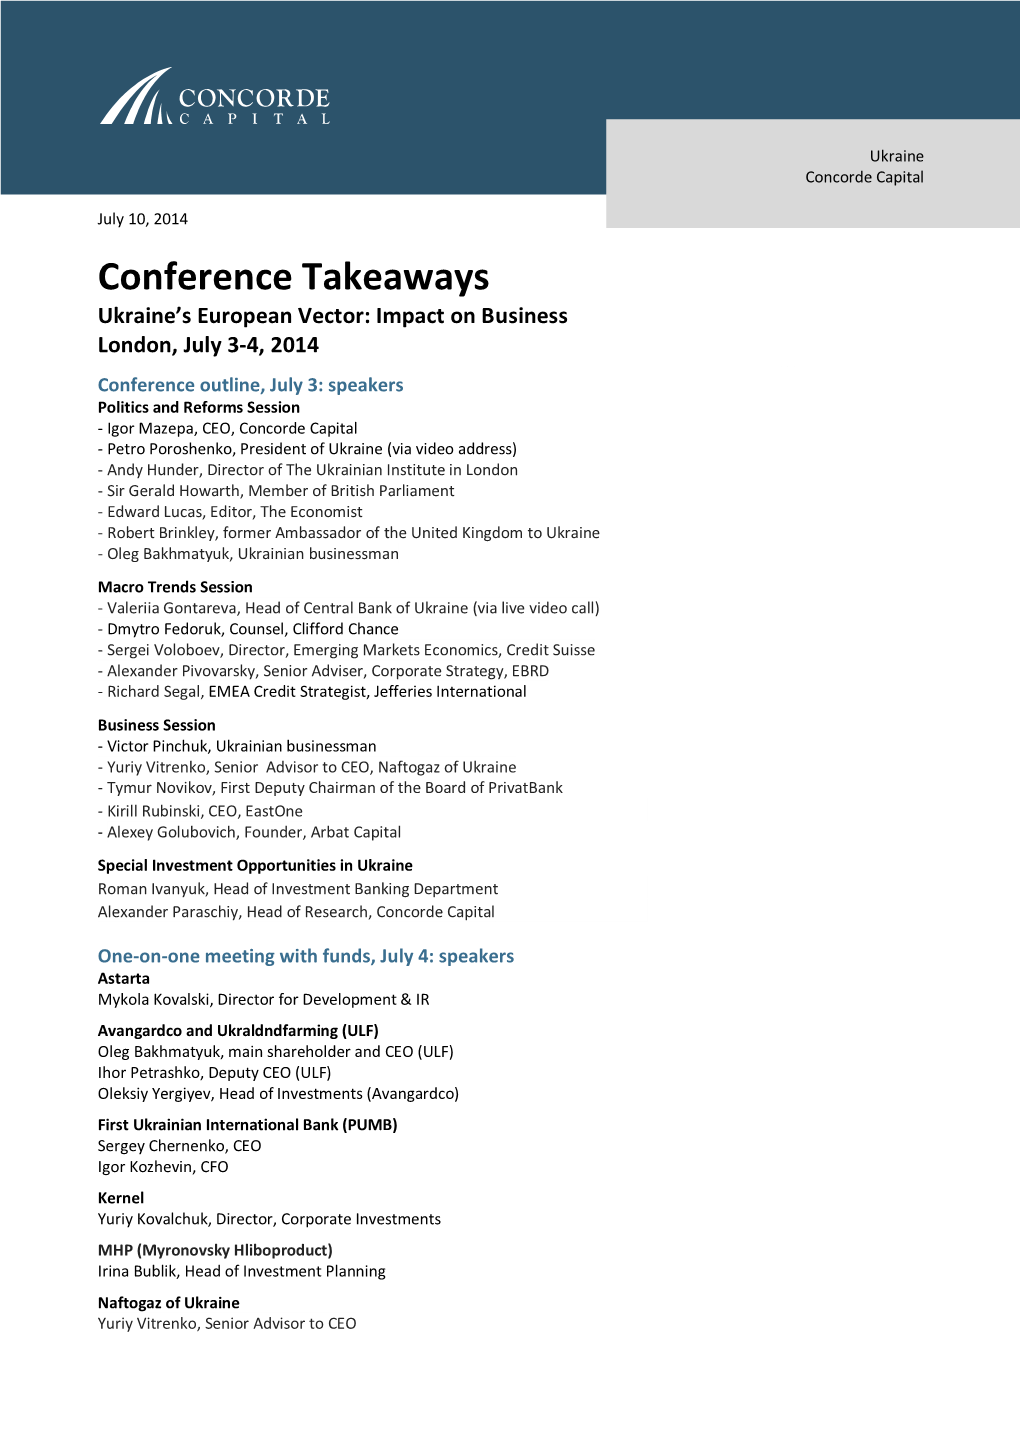 Download Conference Agenda